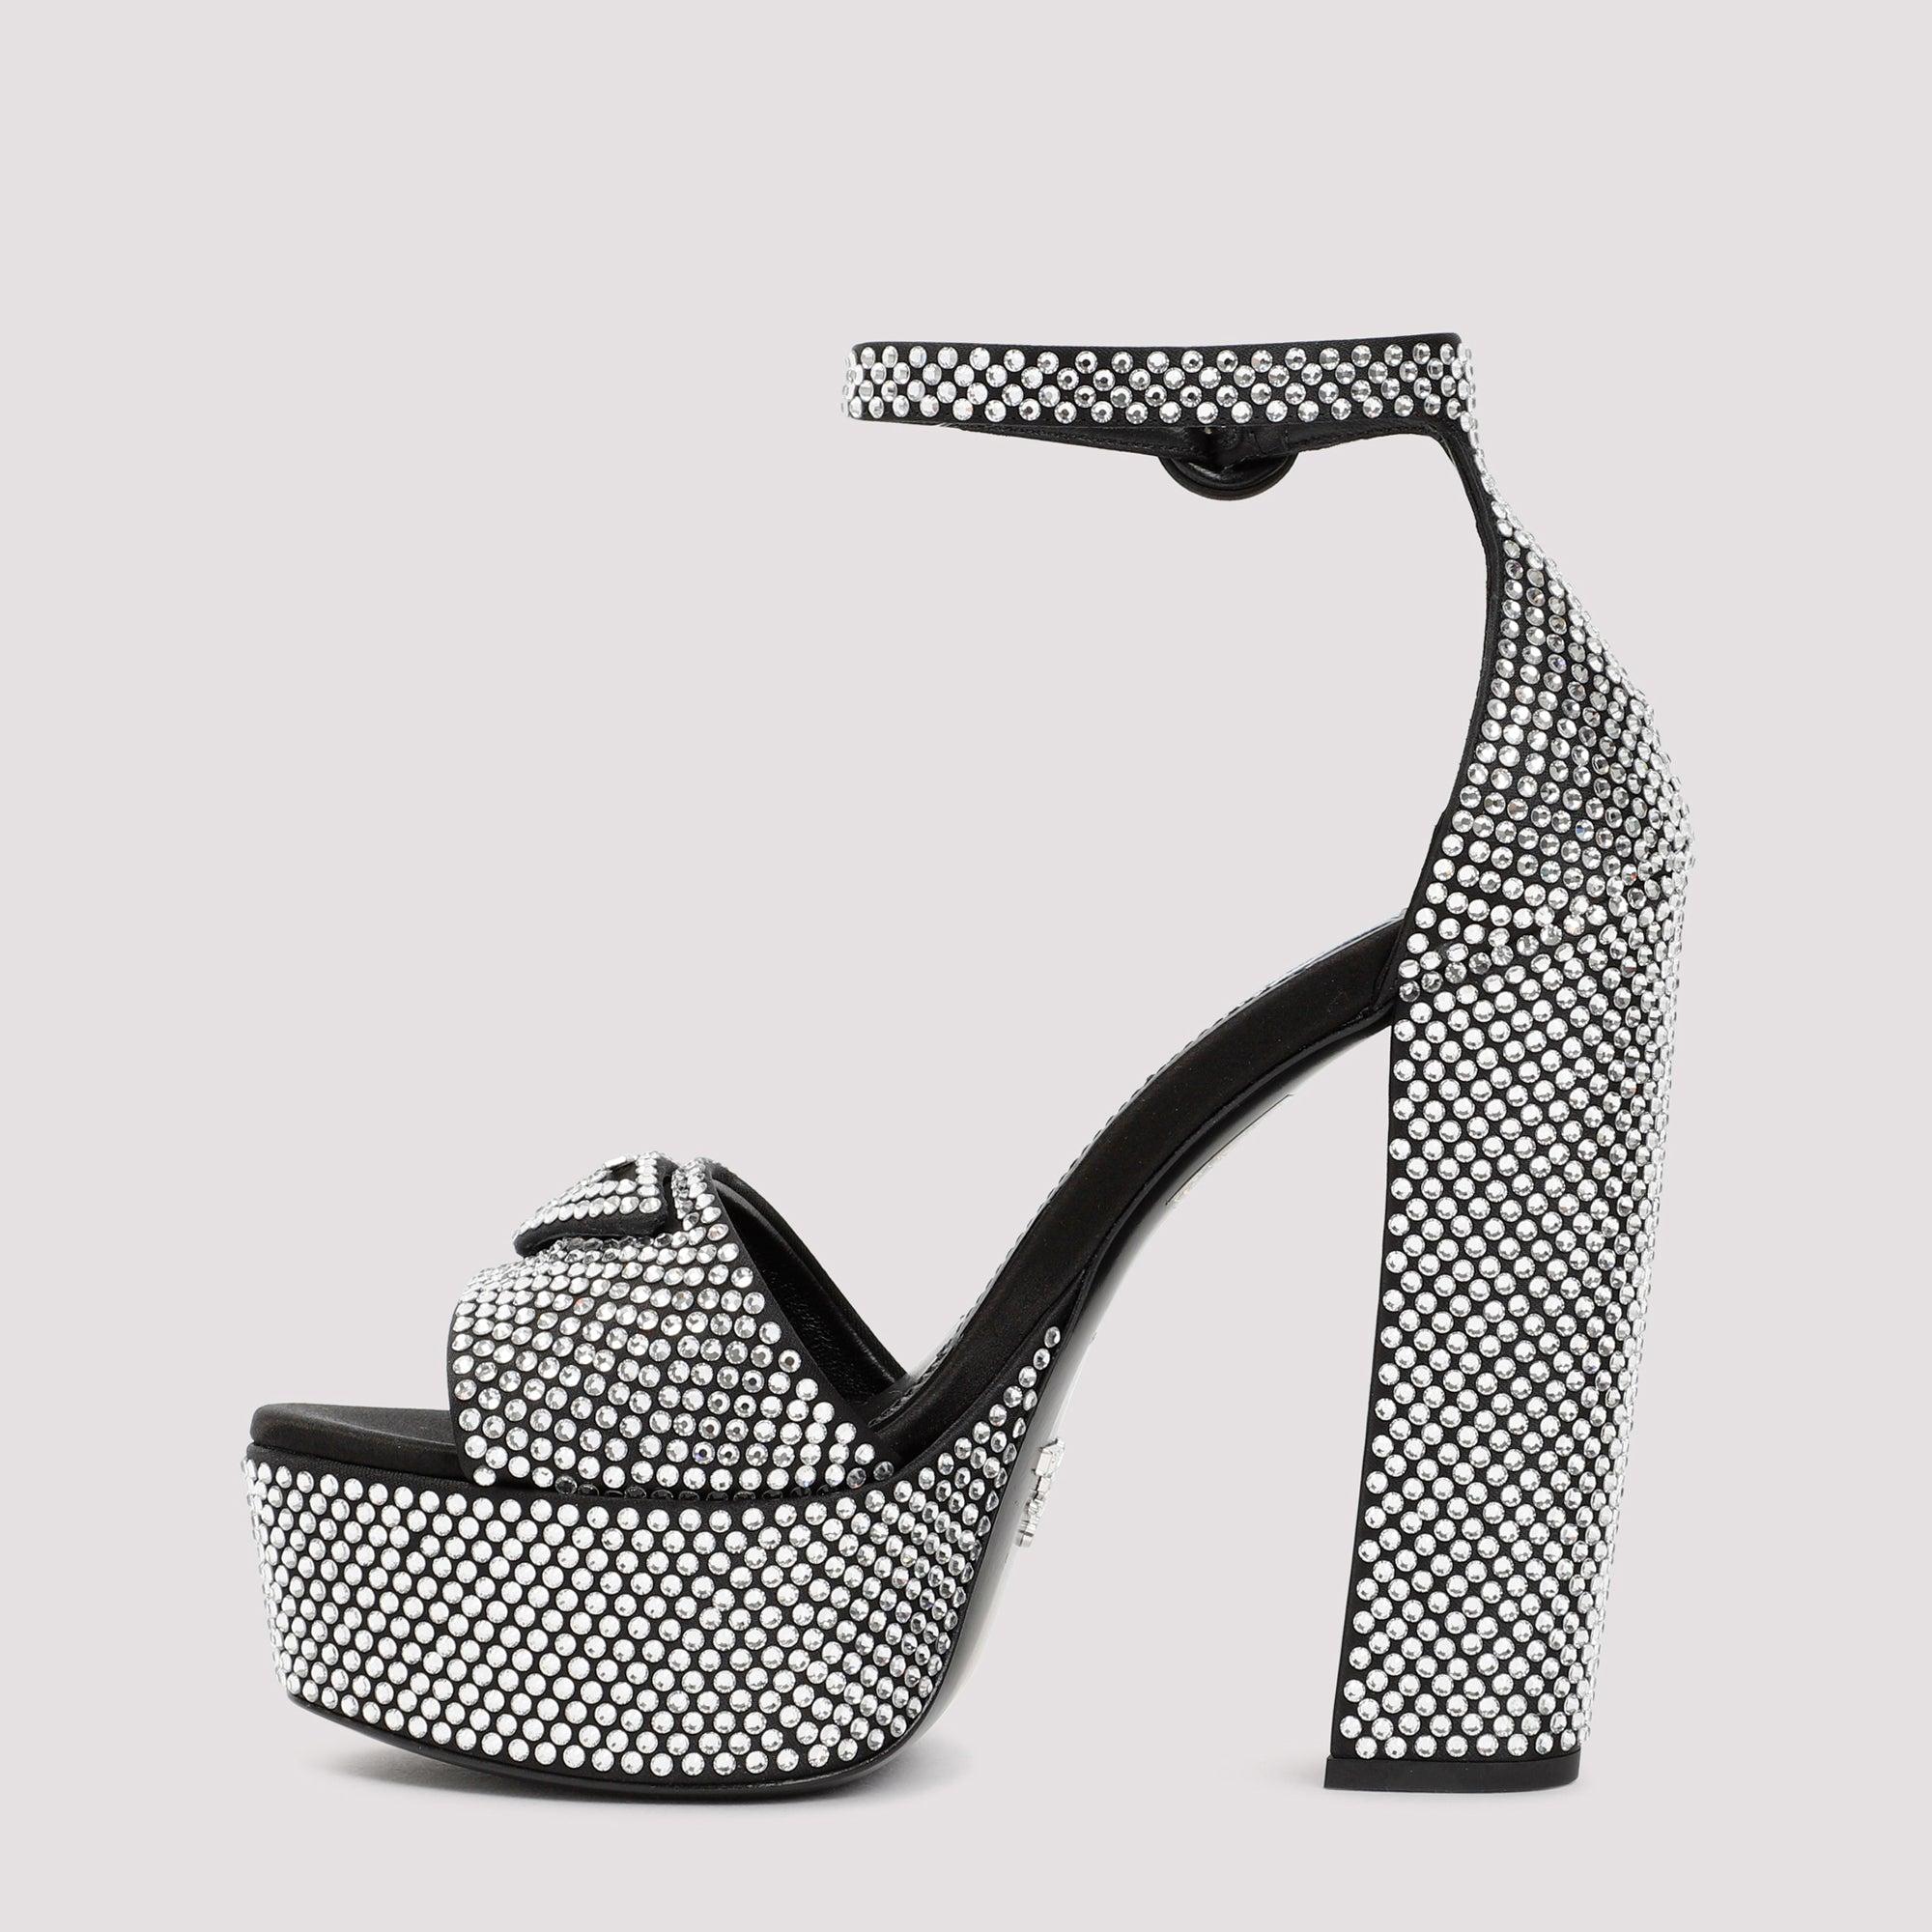 Prada Calzature Donna Black Leather High Heel Pumps Shoes Women's Size 7 |  eBay